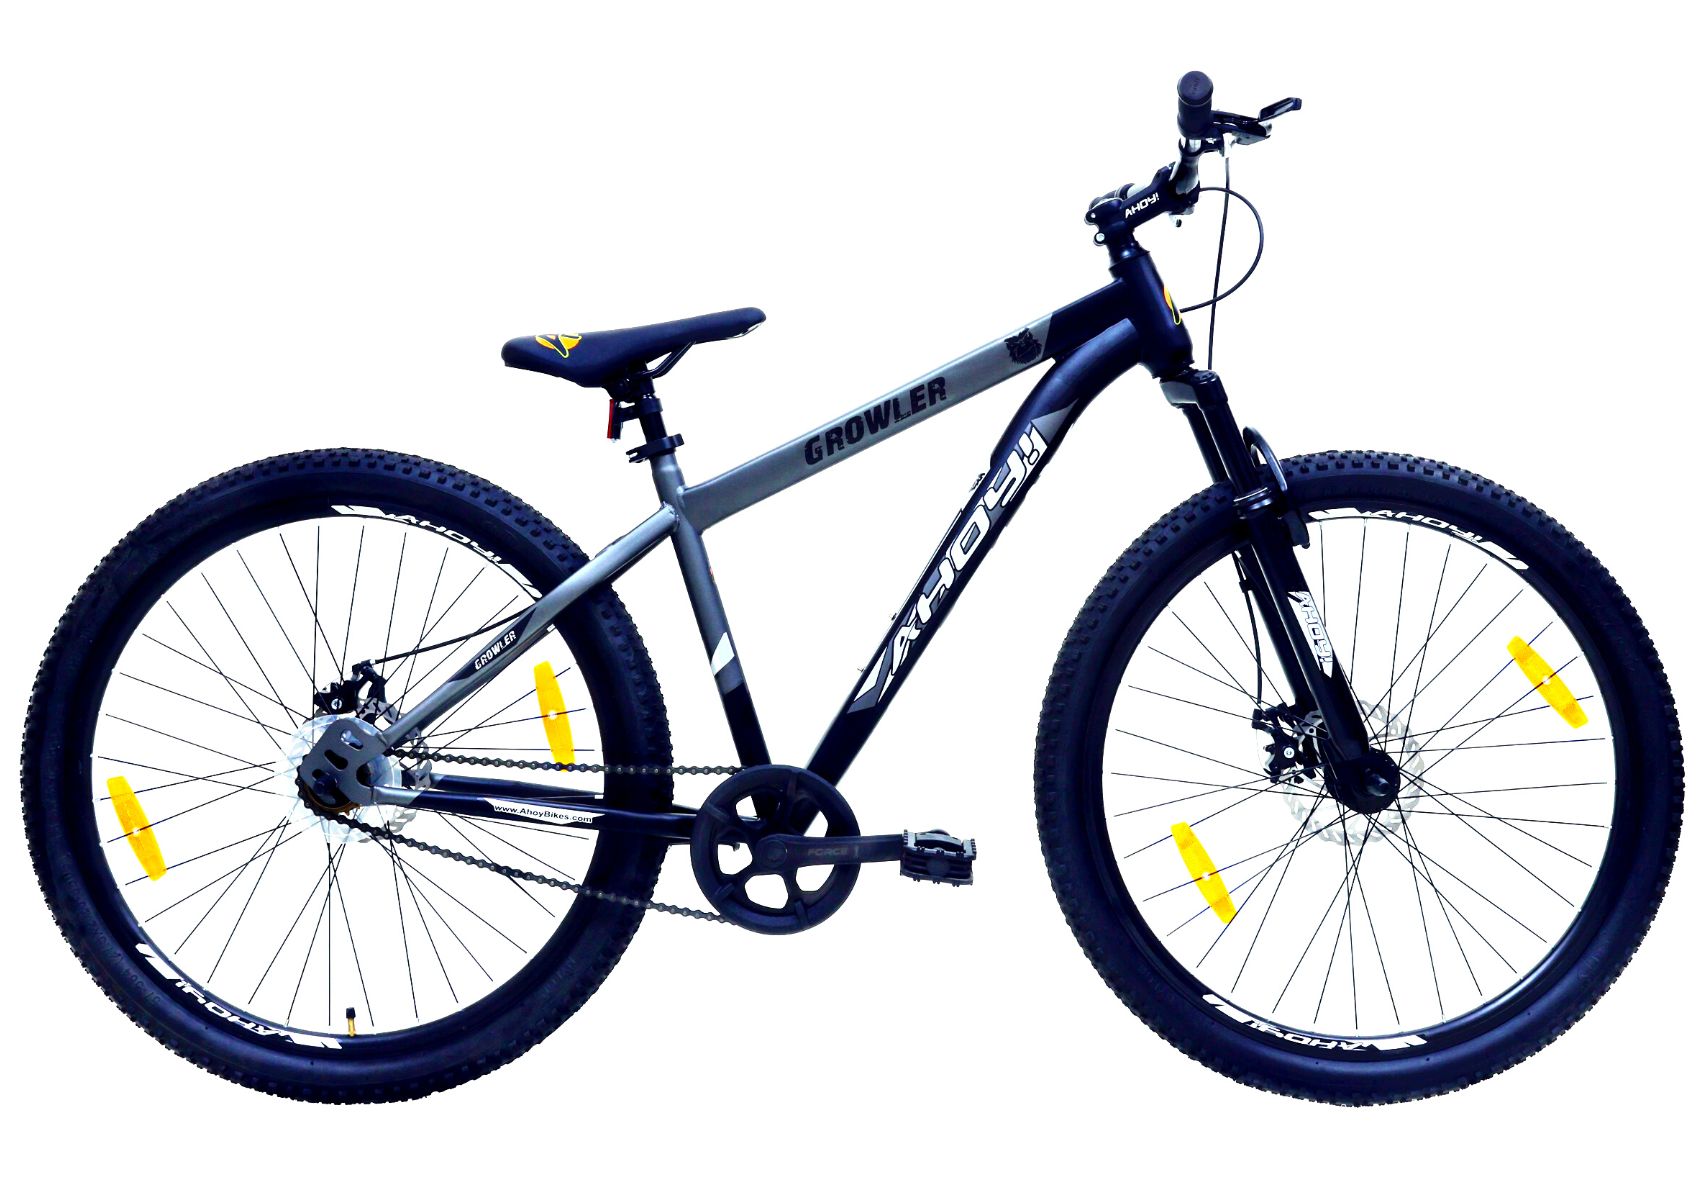 Growler All Terrain Bike 29T | Buy Grey Non Gear Cycle for Men